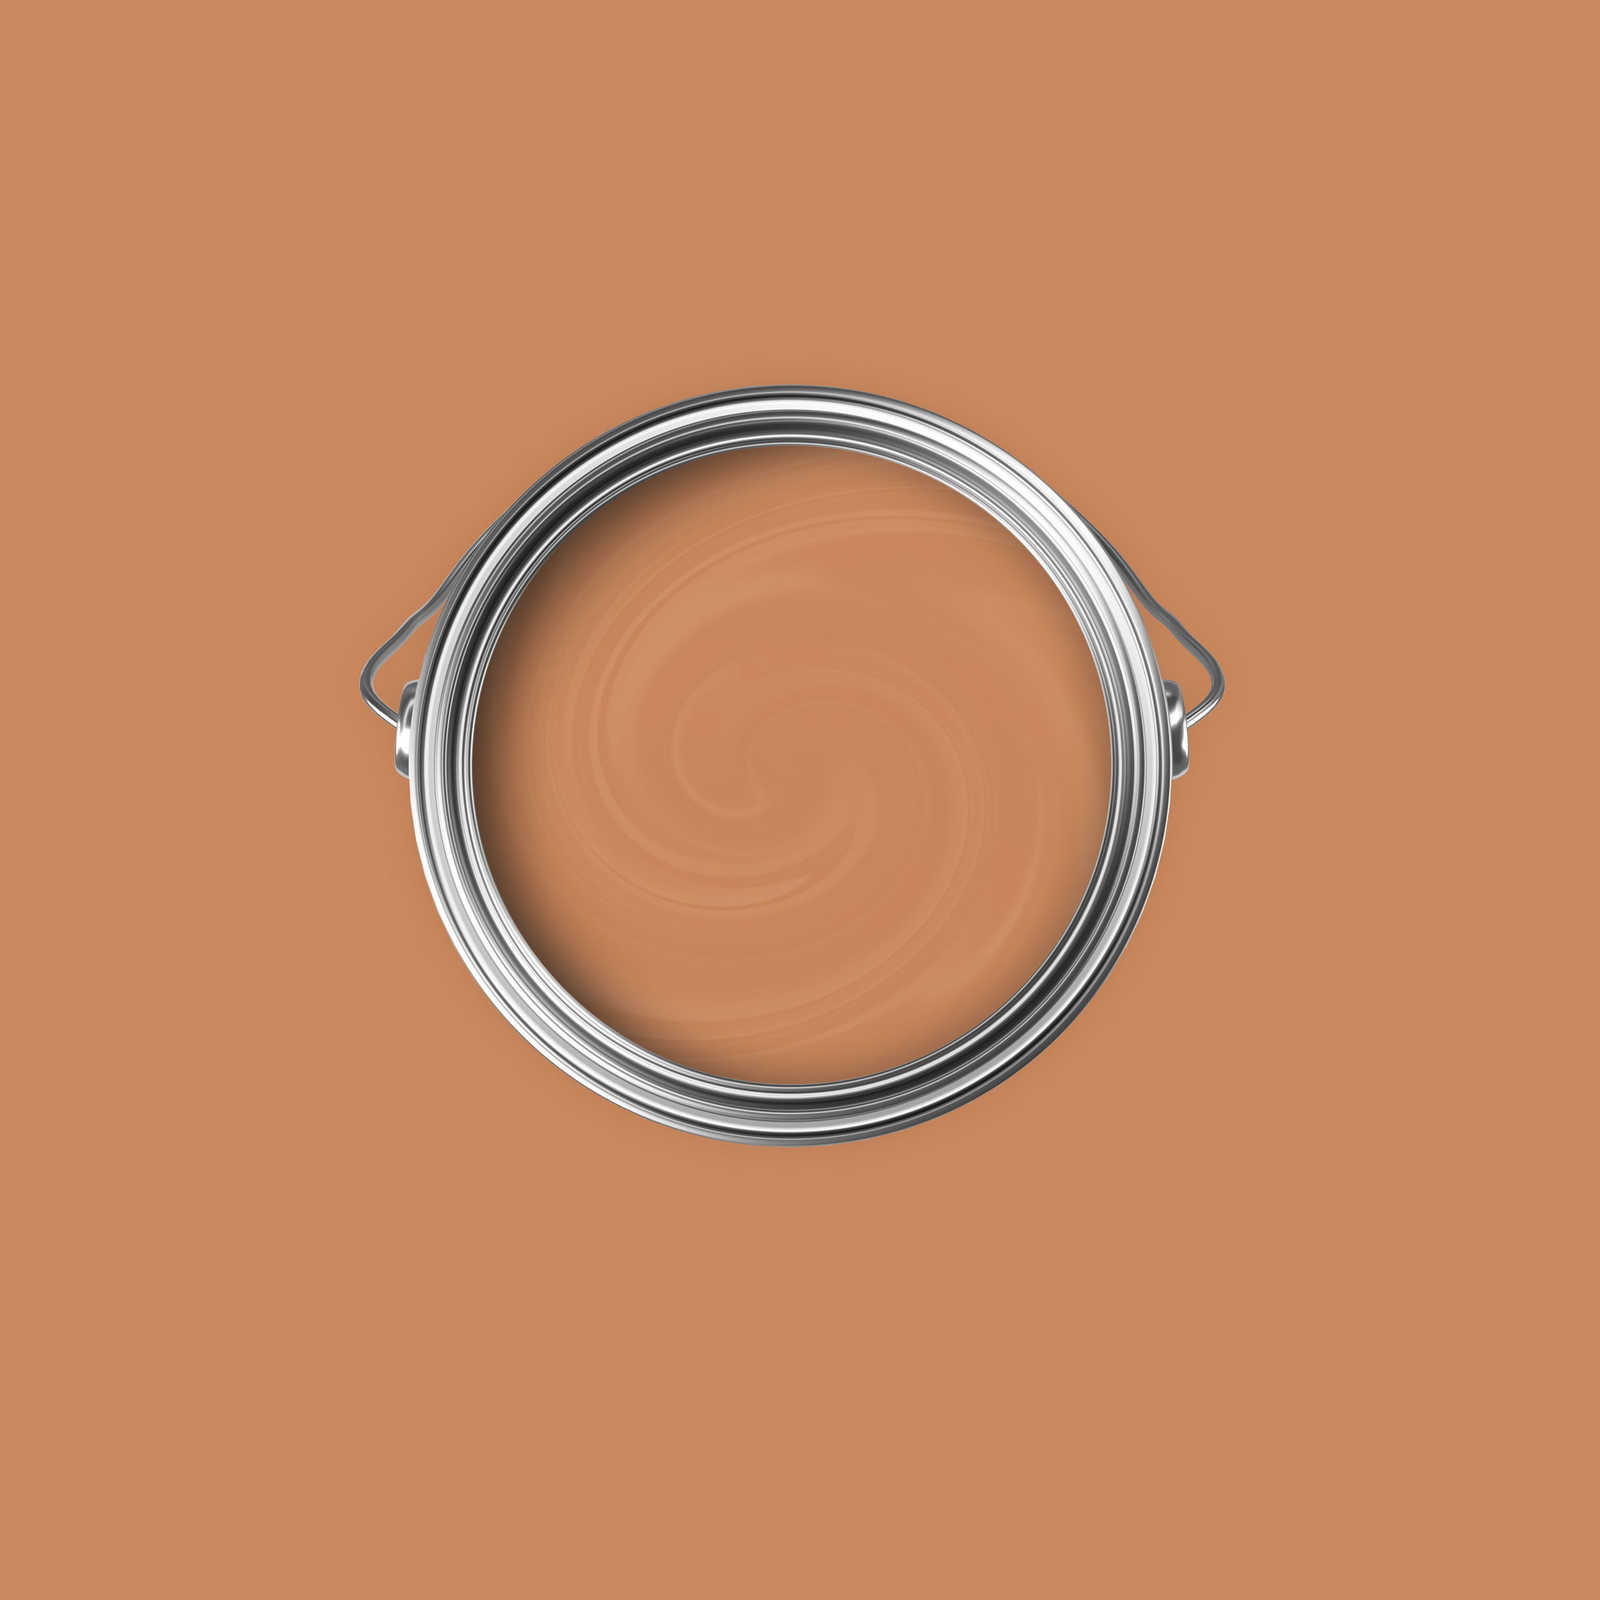             Premium Wandfarbe heiteres Kupfer »Pretty Peach« NW904 – 2,5 Liter
        